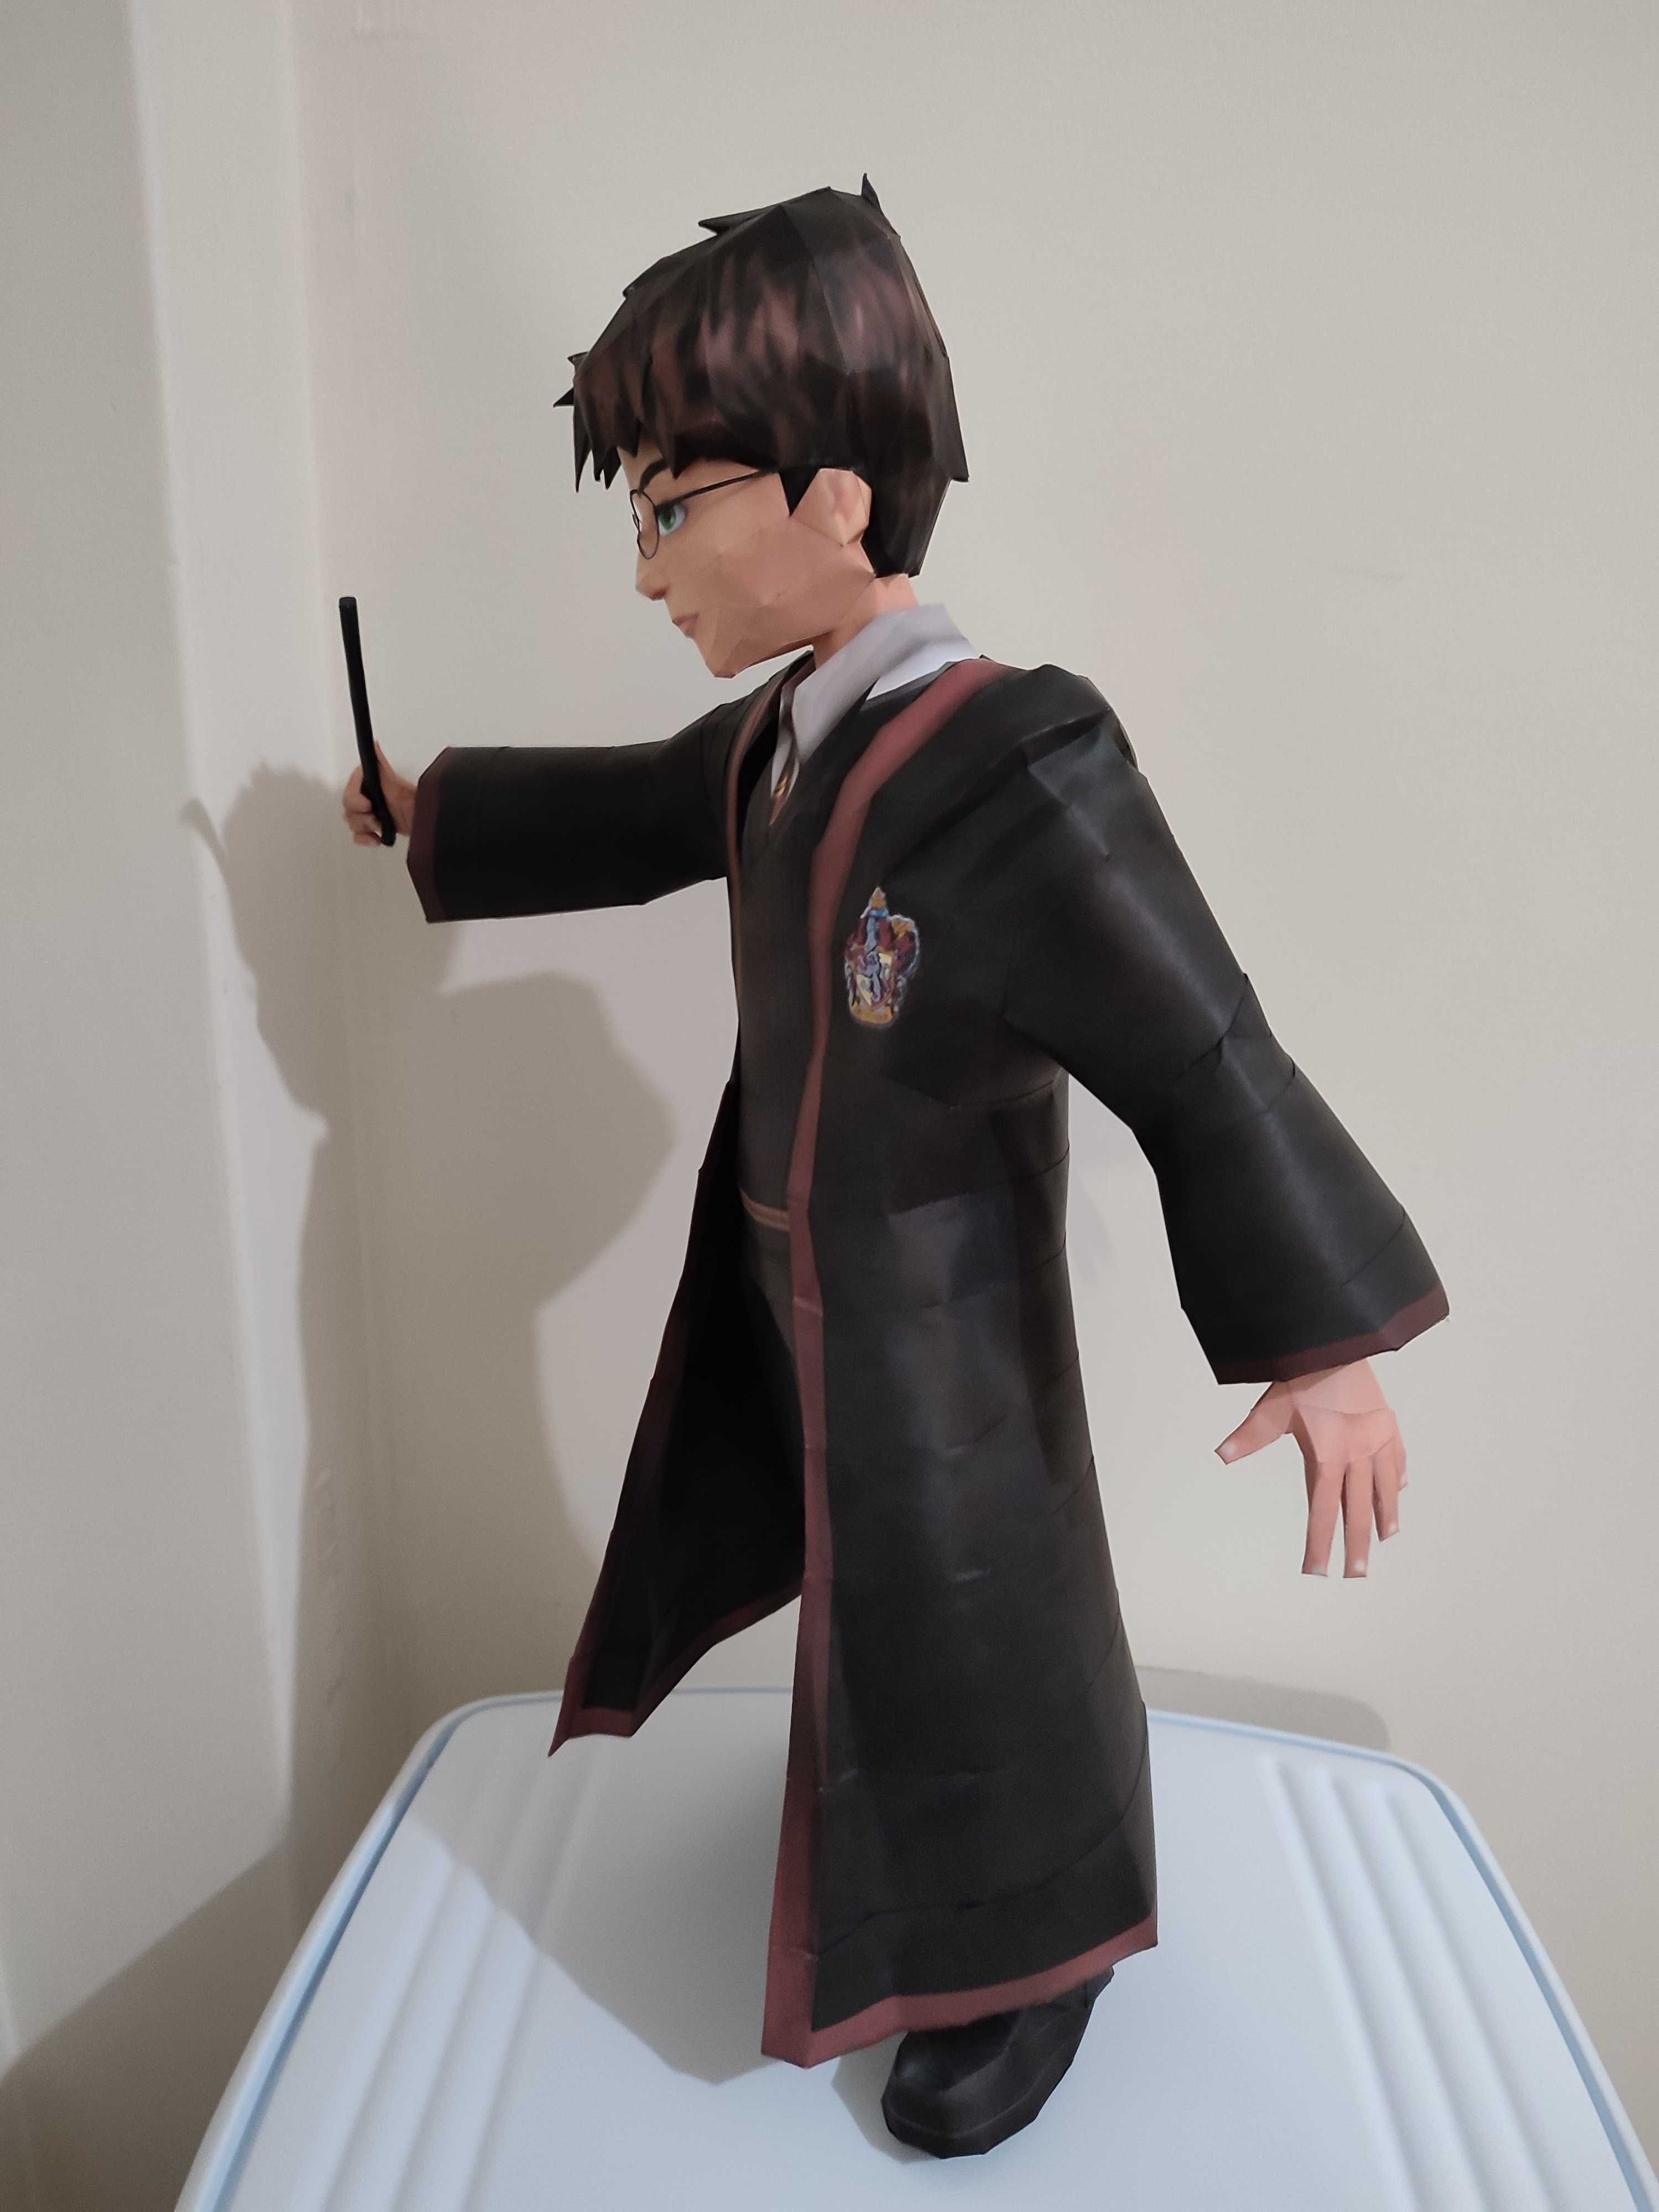 Harry Potter - Produto artesanal